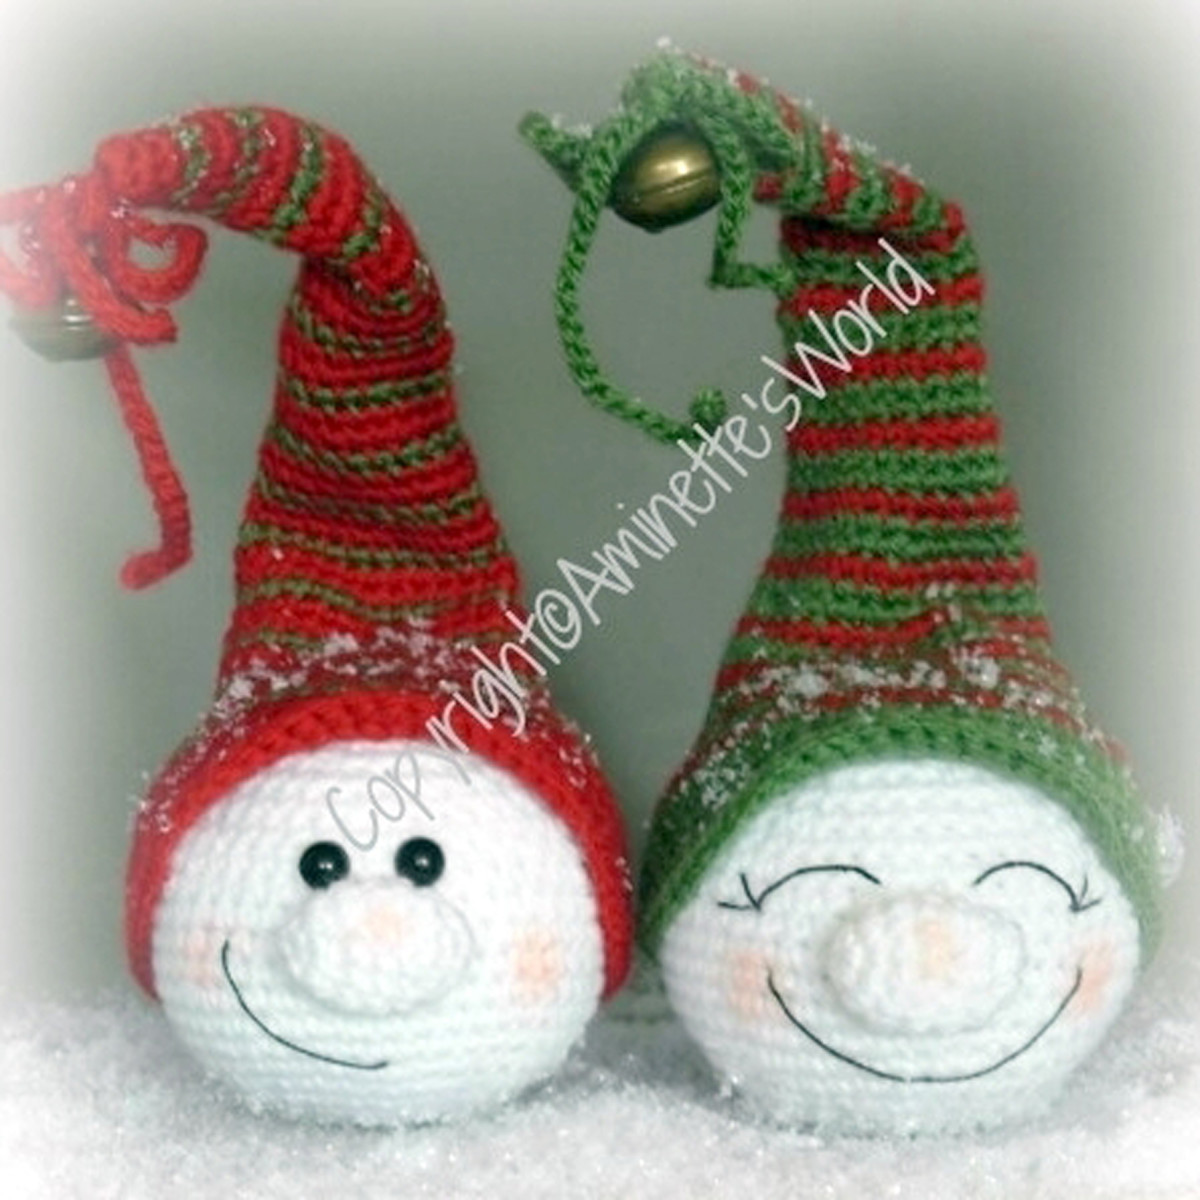 Free crochet pattern amigurumi Christmas snowman.